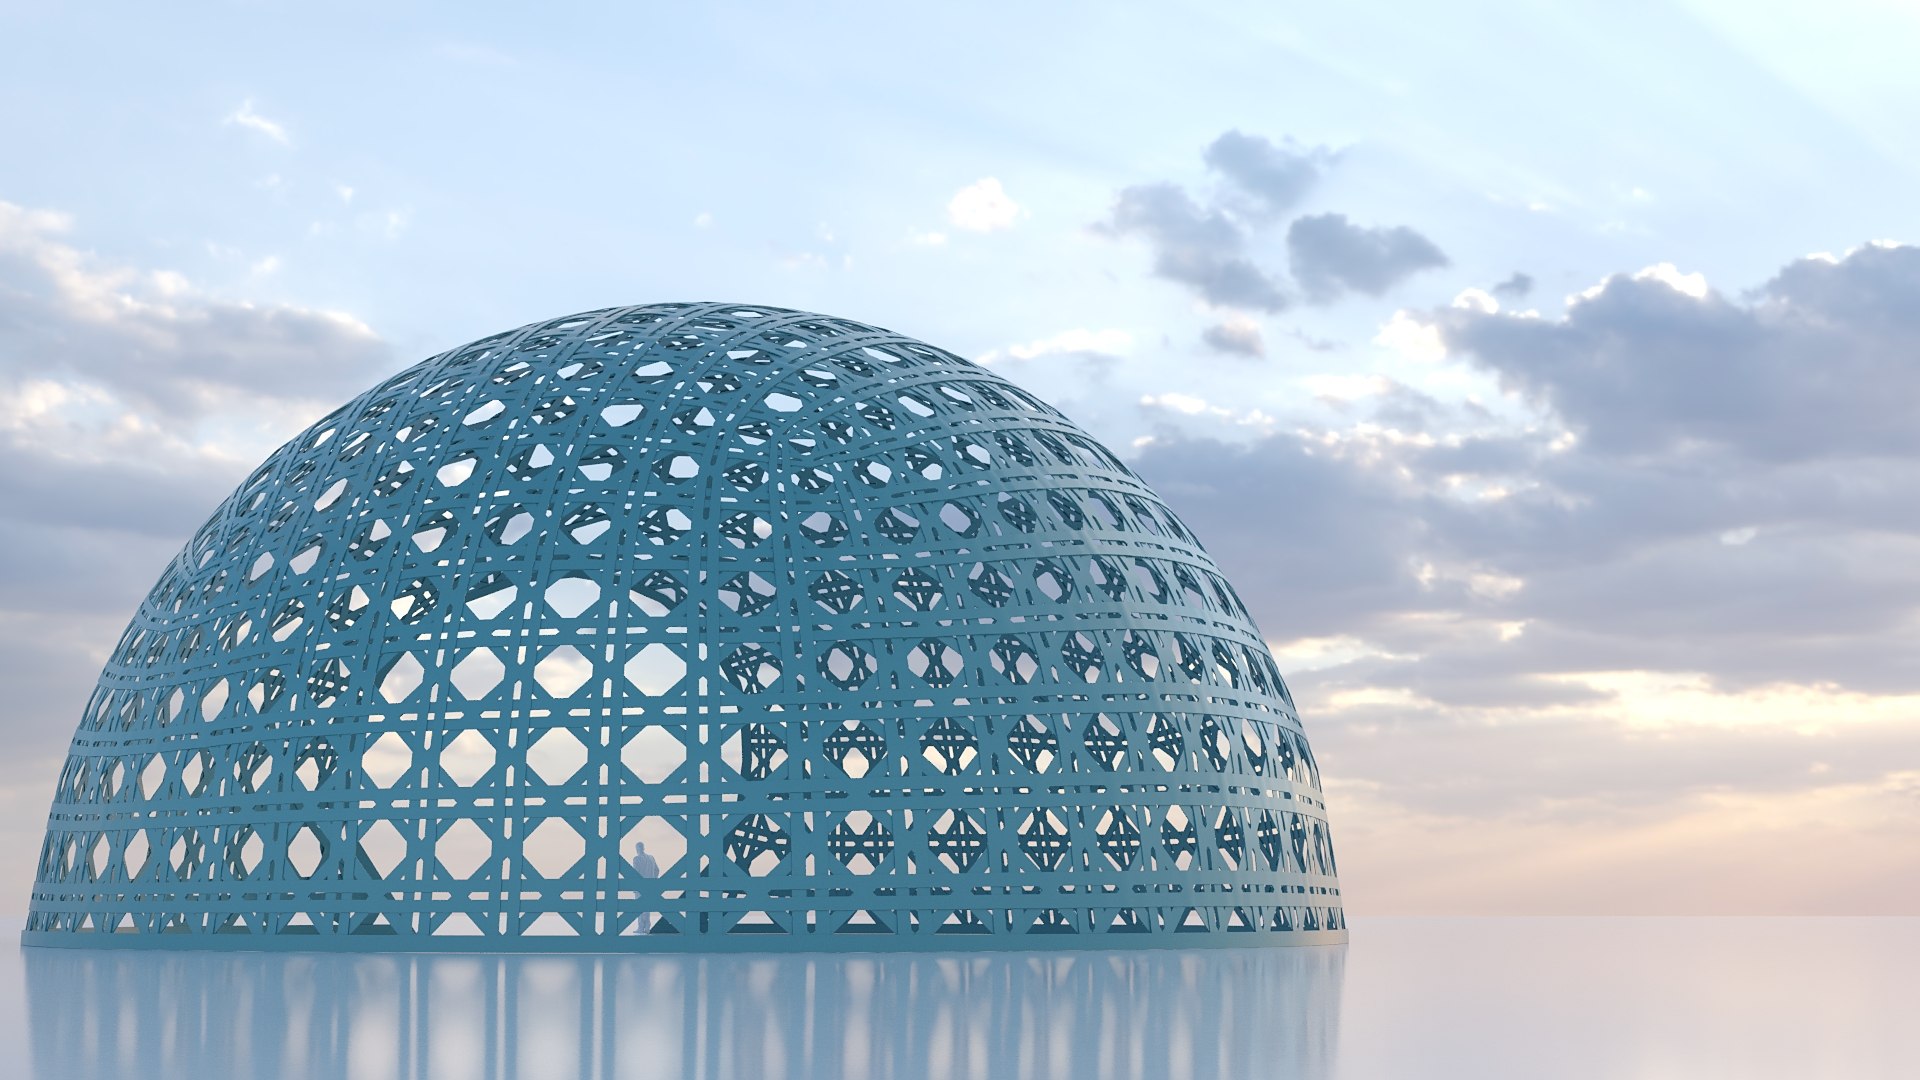 Wicker Dome Pavilion 3D Model - TurboSquid 2131354